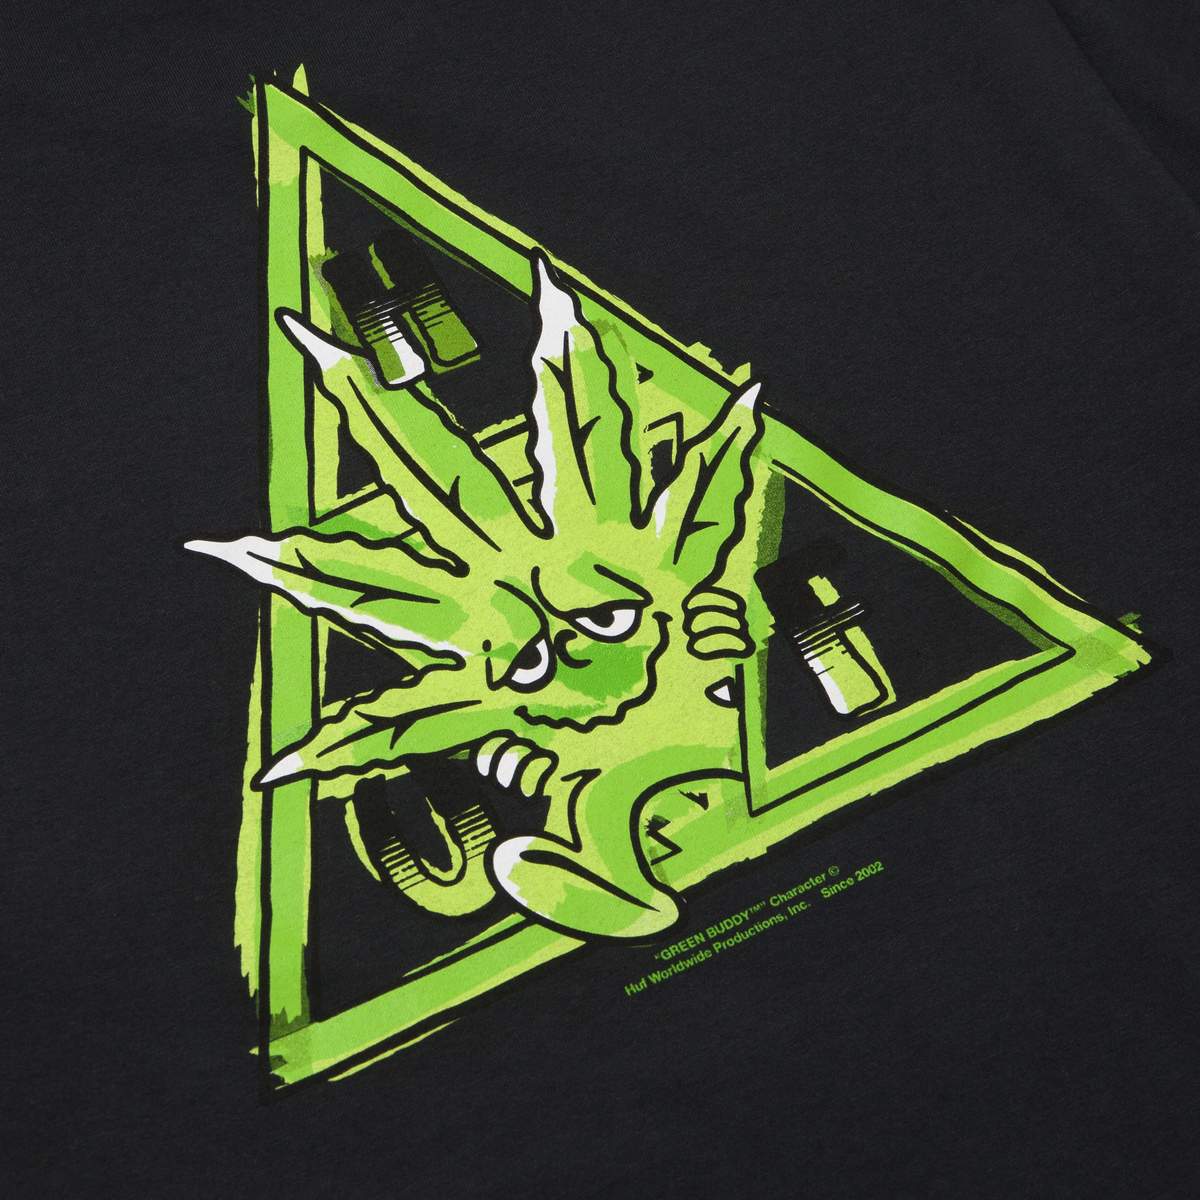 HUF Green Buddy Triple Triangle T-Shirt